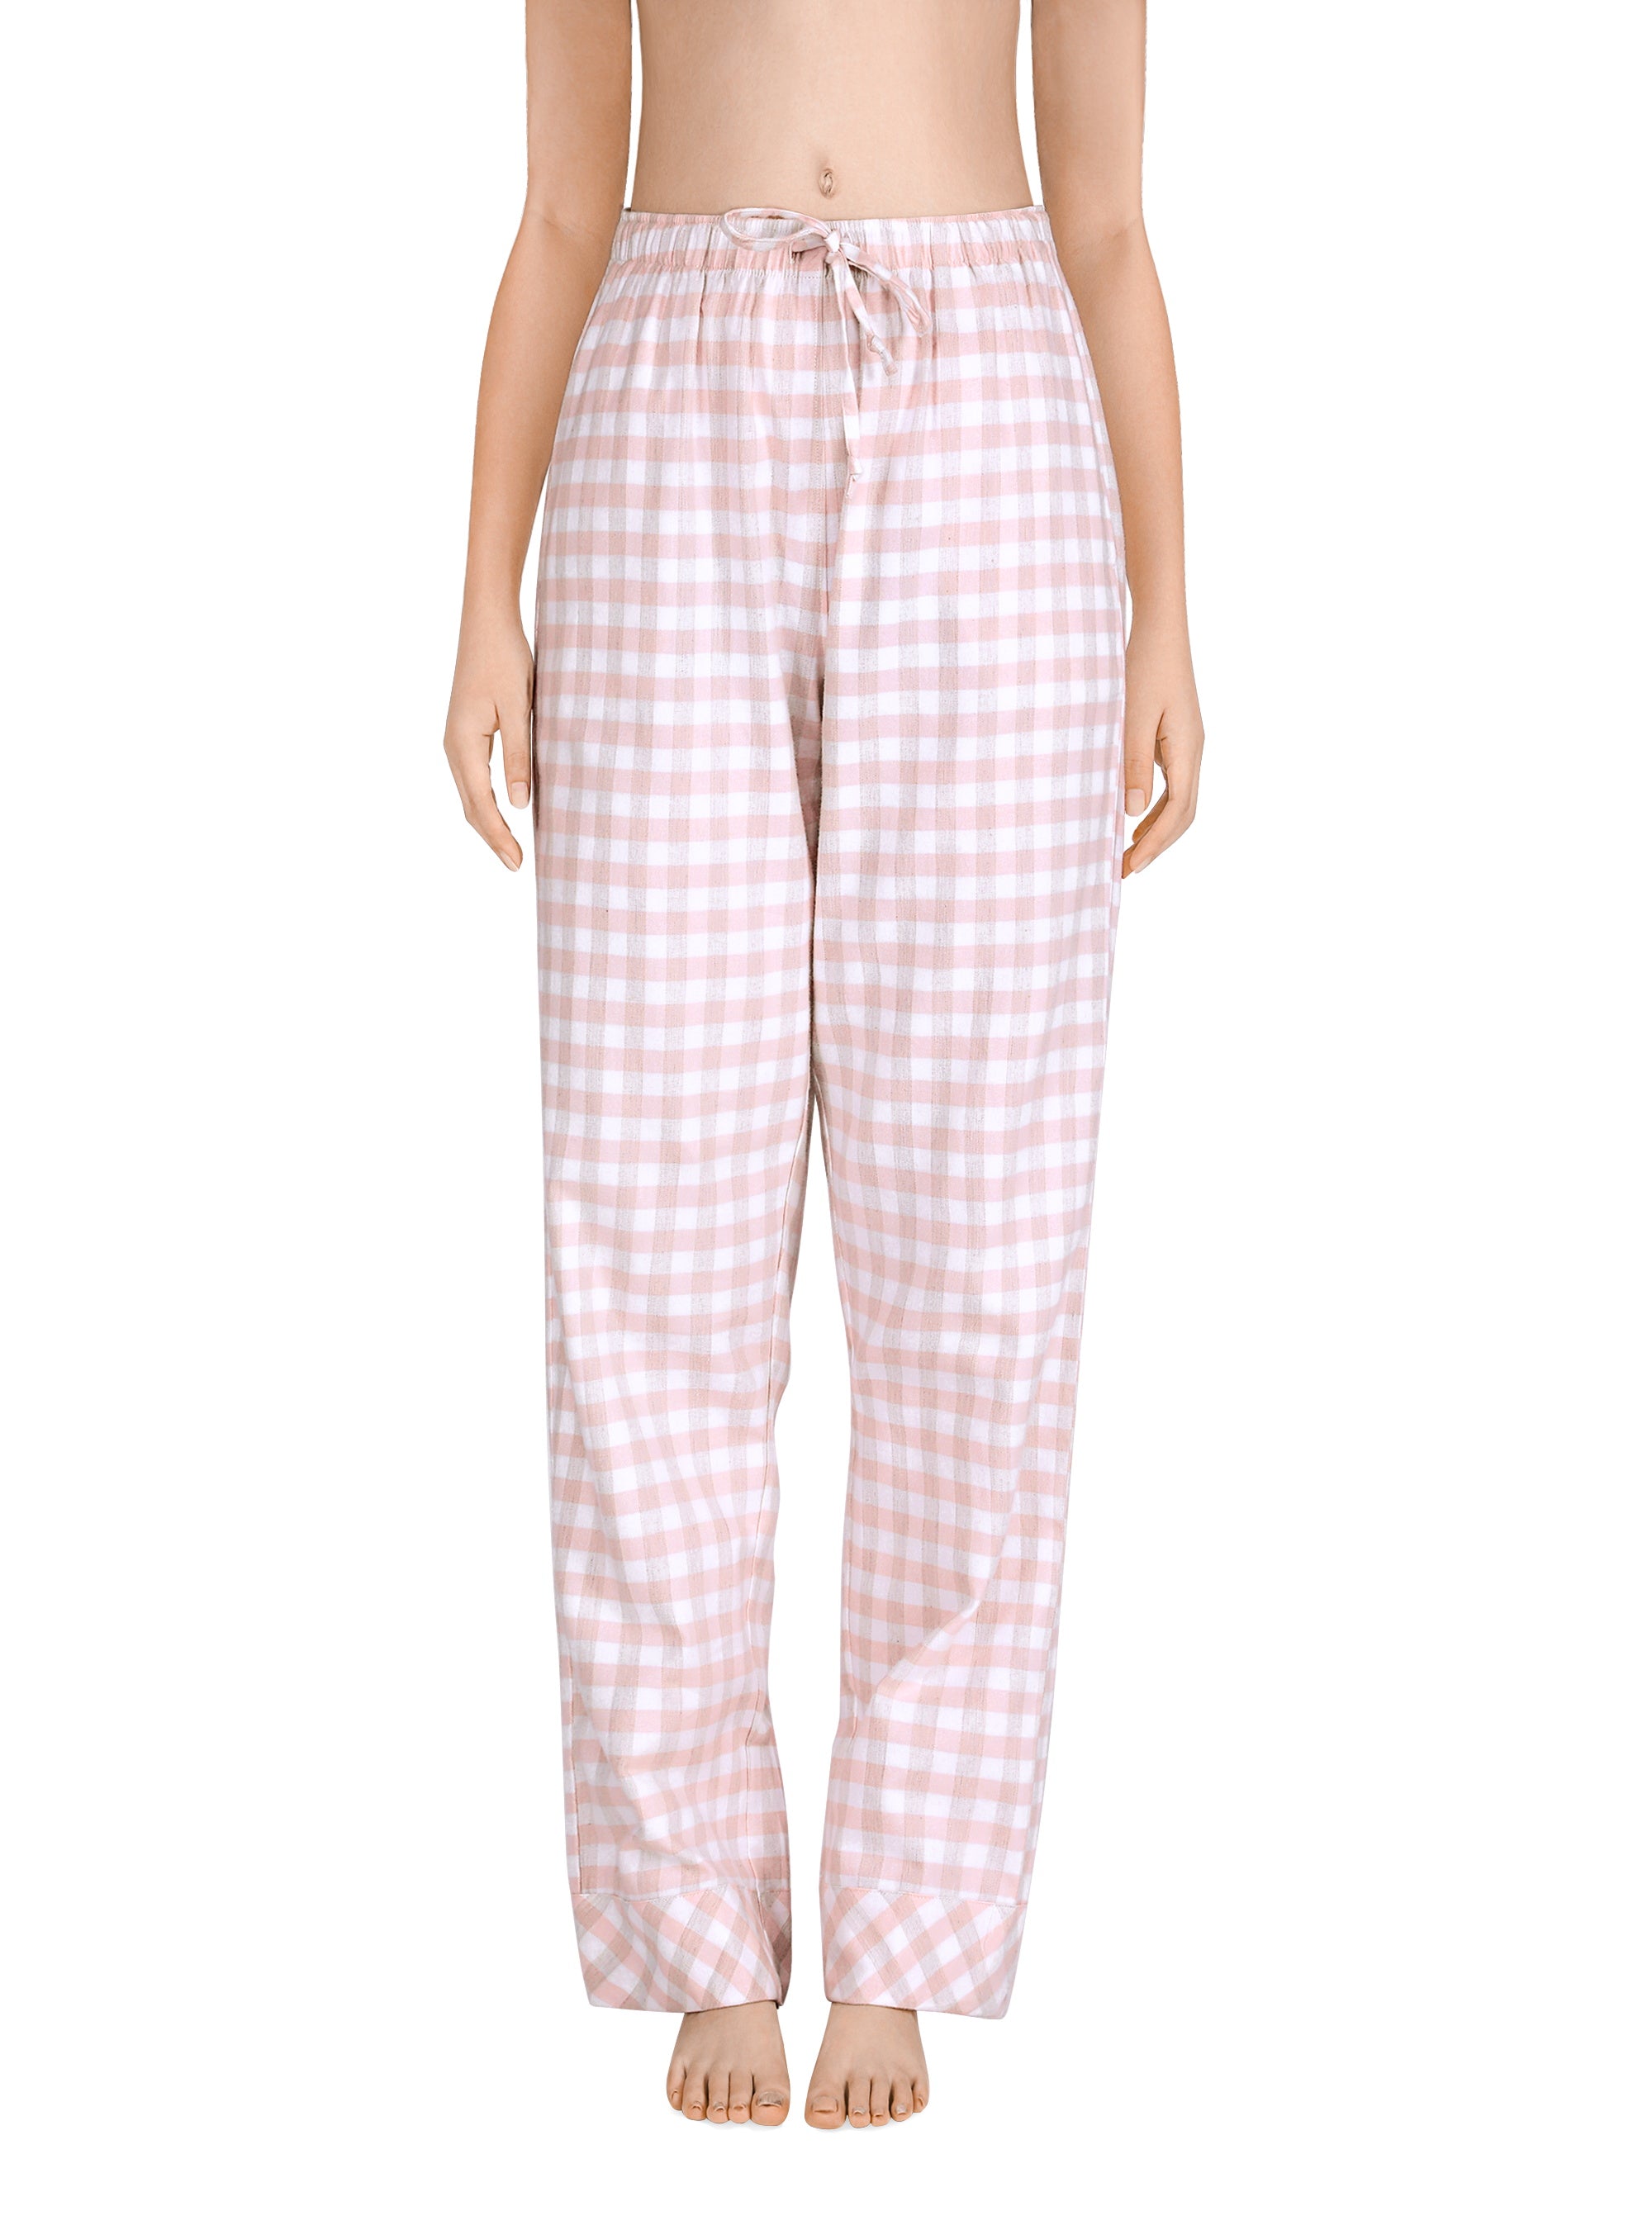 Pajama Pants for Women Cotton Lounge Pant 2 Packs - FemoFit